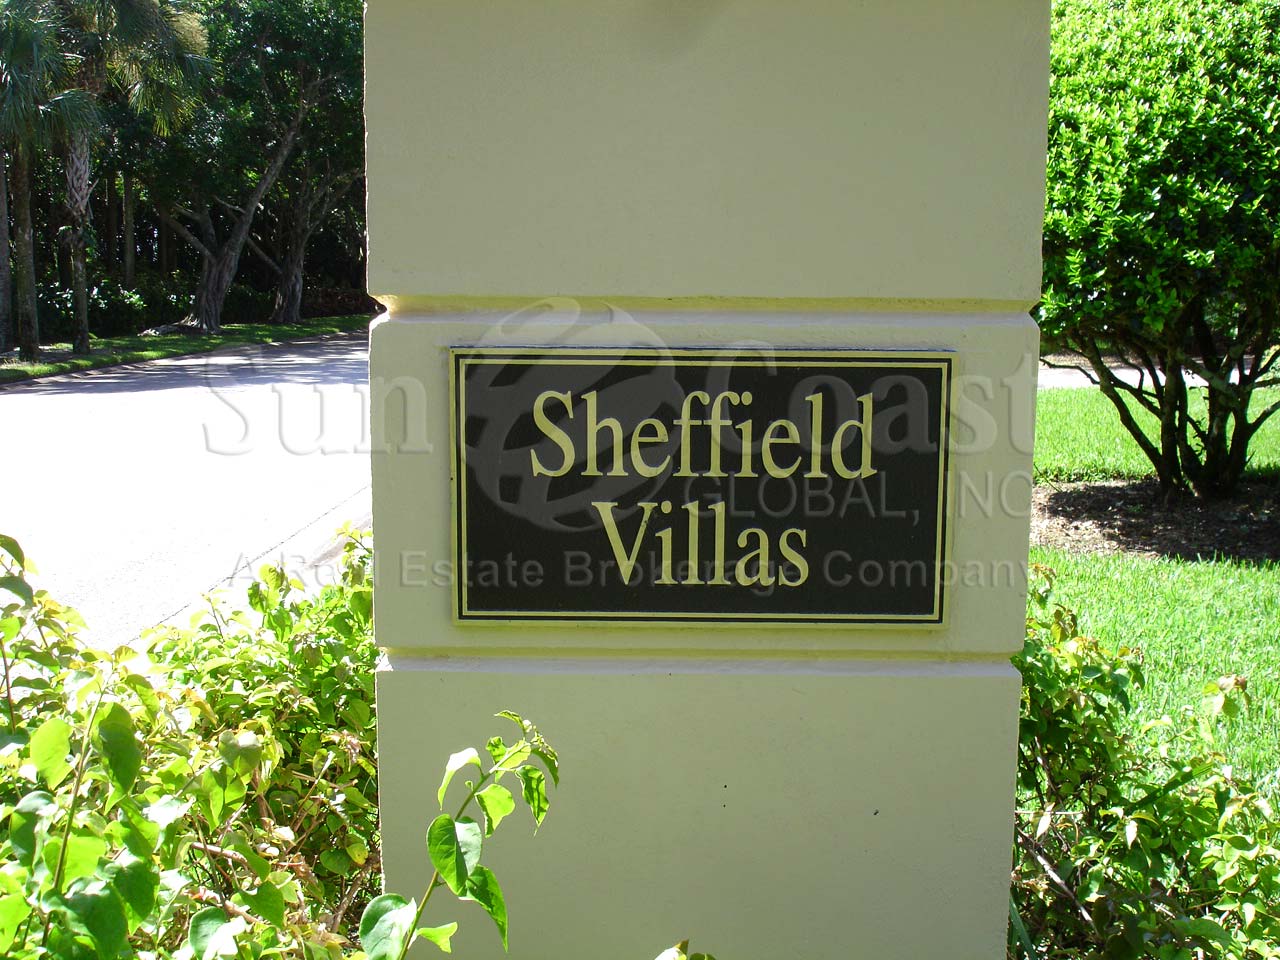 Sheffield Villas Signage